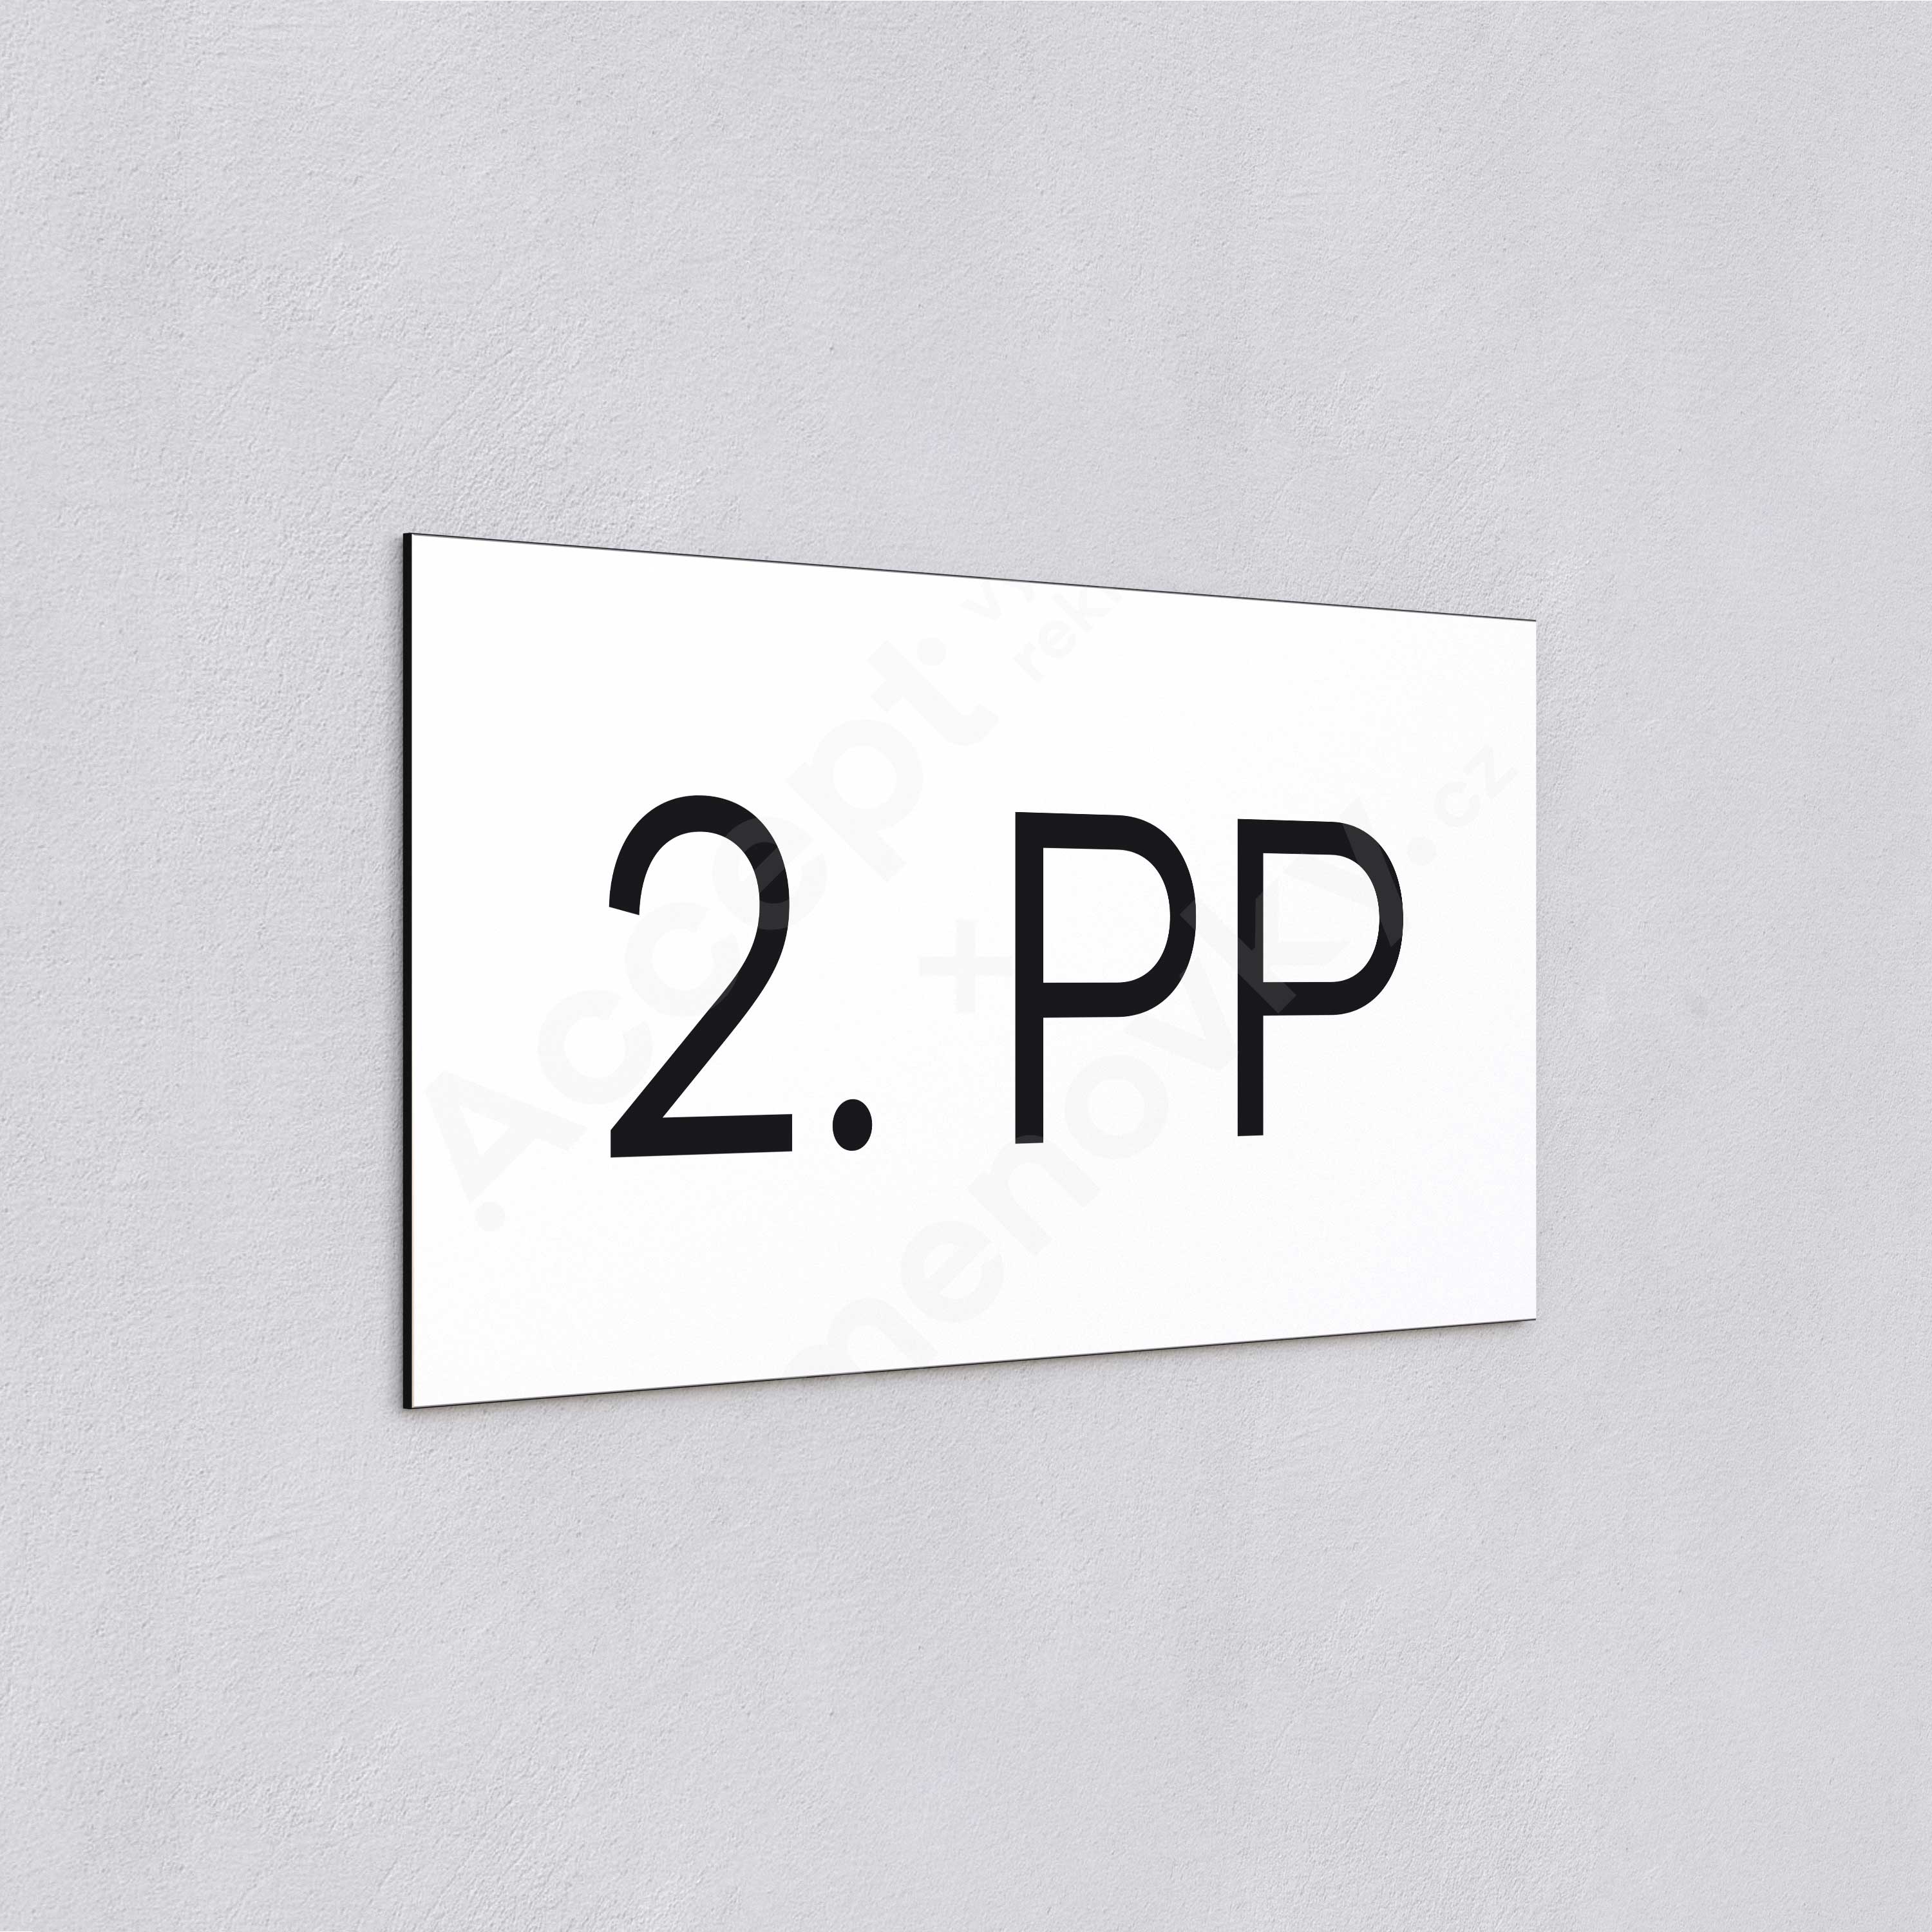 Označení podlaží "2. PP" - bílá tabulka - černý popis